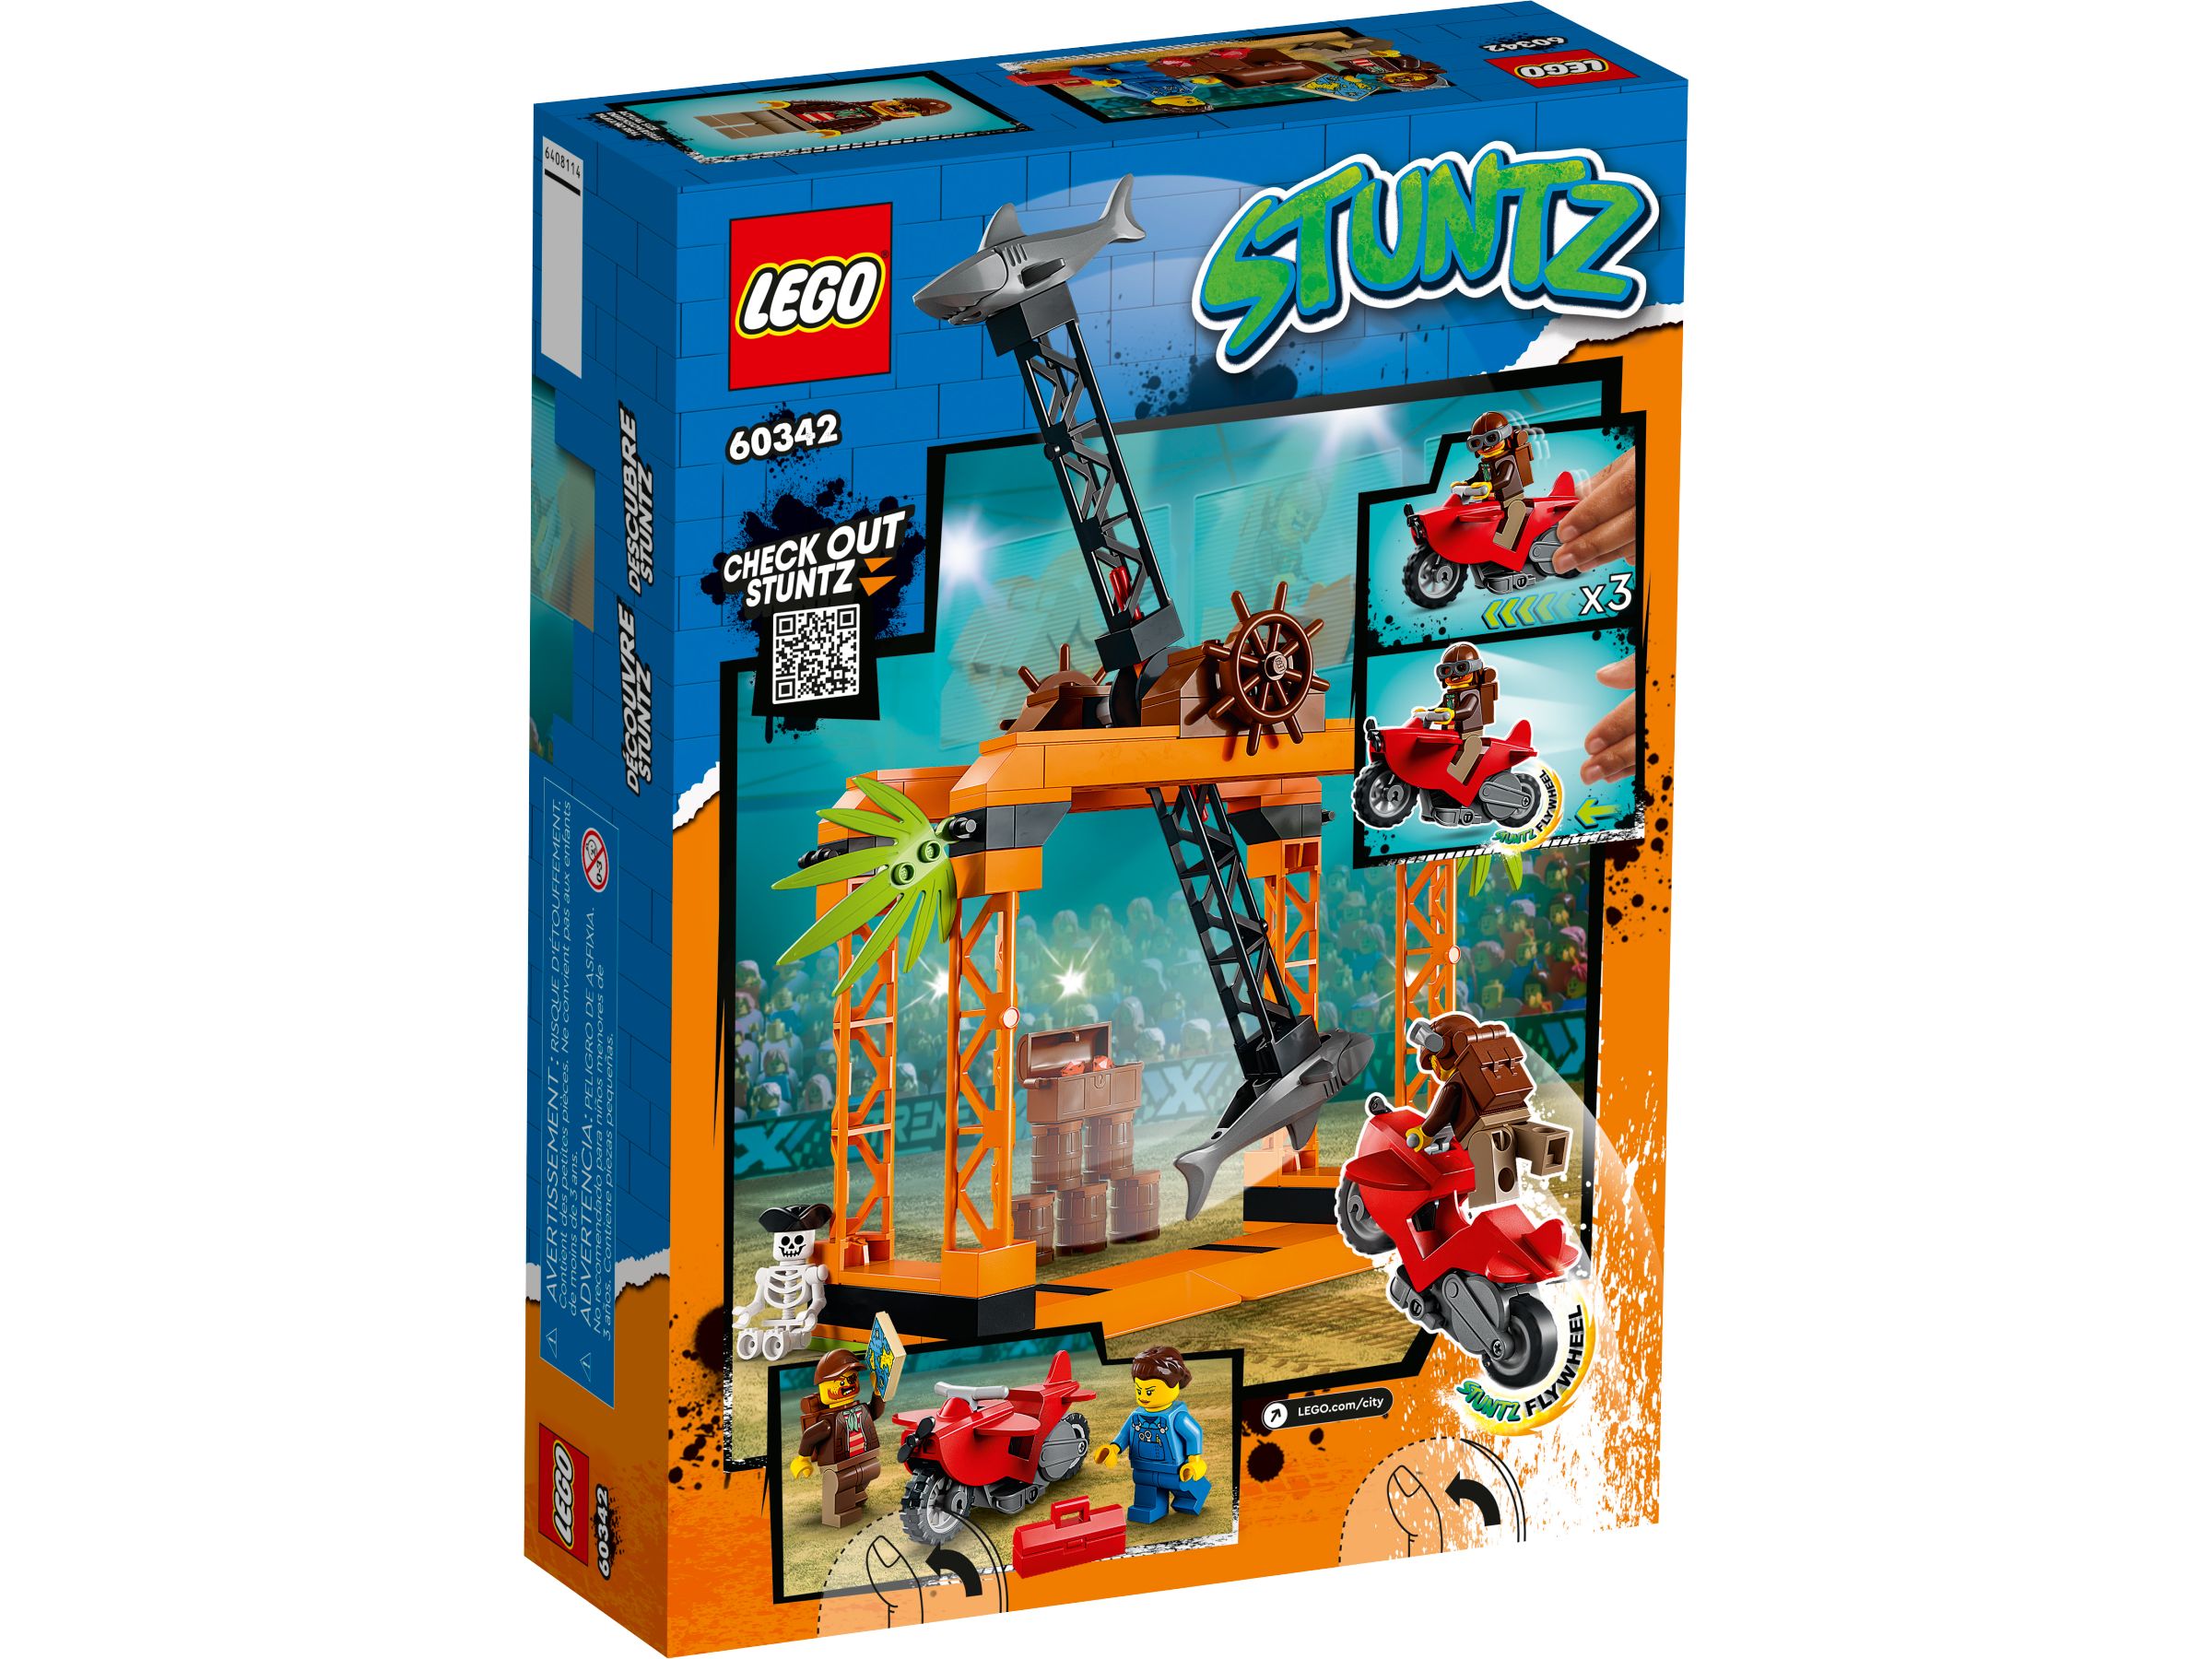 LEGO City 60342 Haiangriff-Stuntchallenge LEGO_60342_alt6.jpg